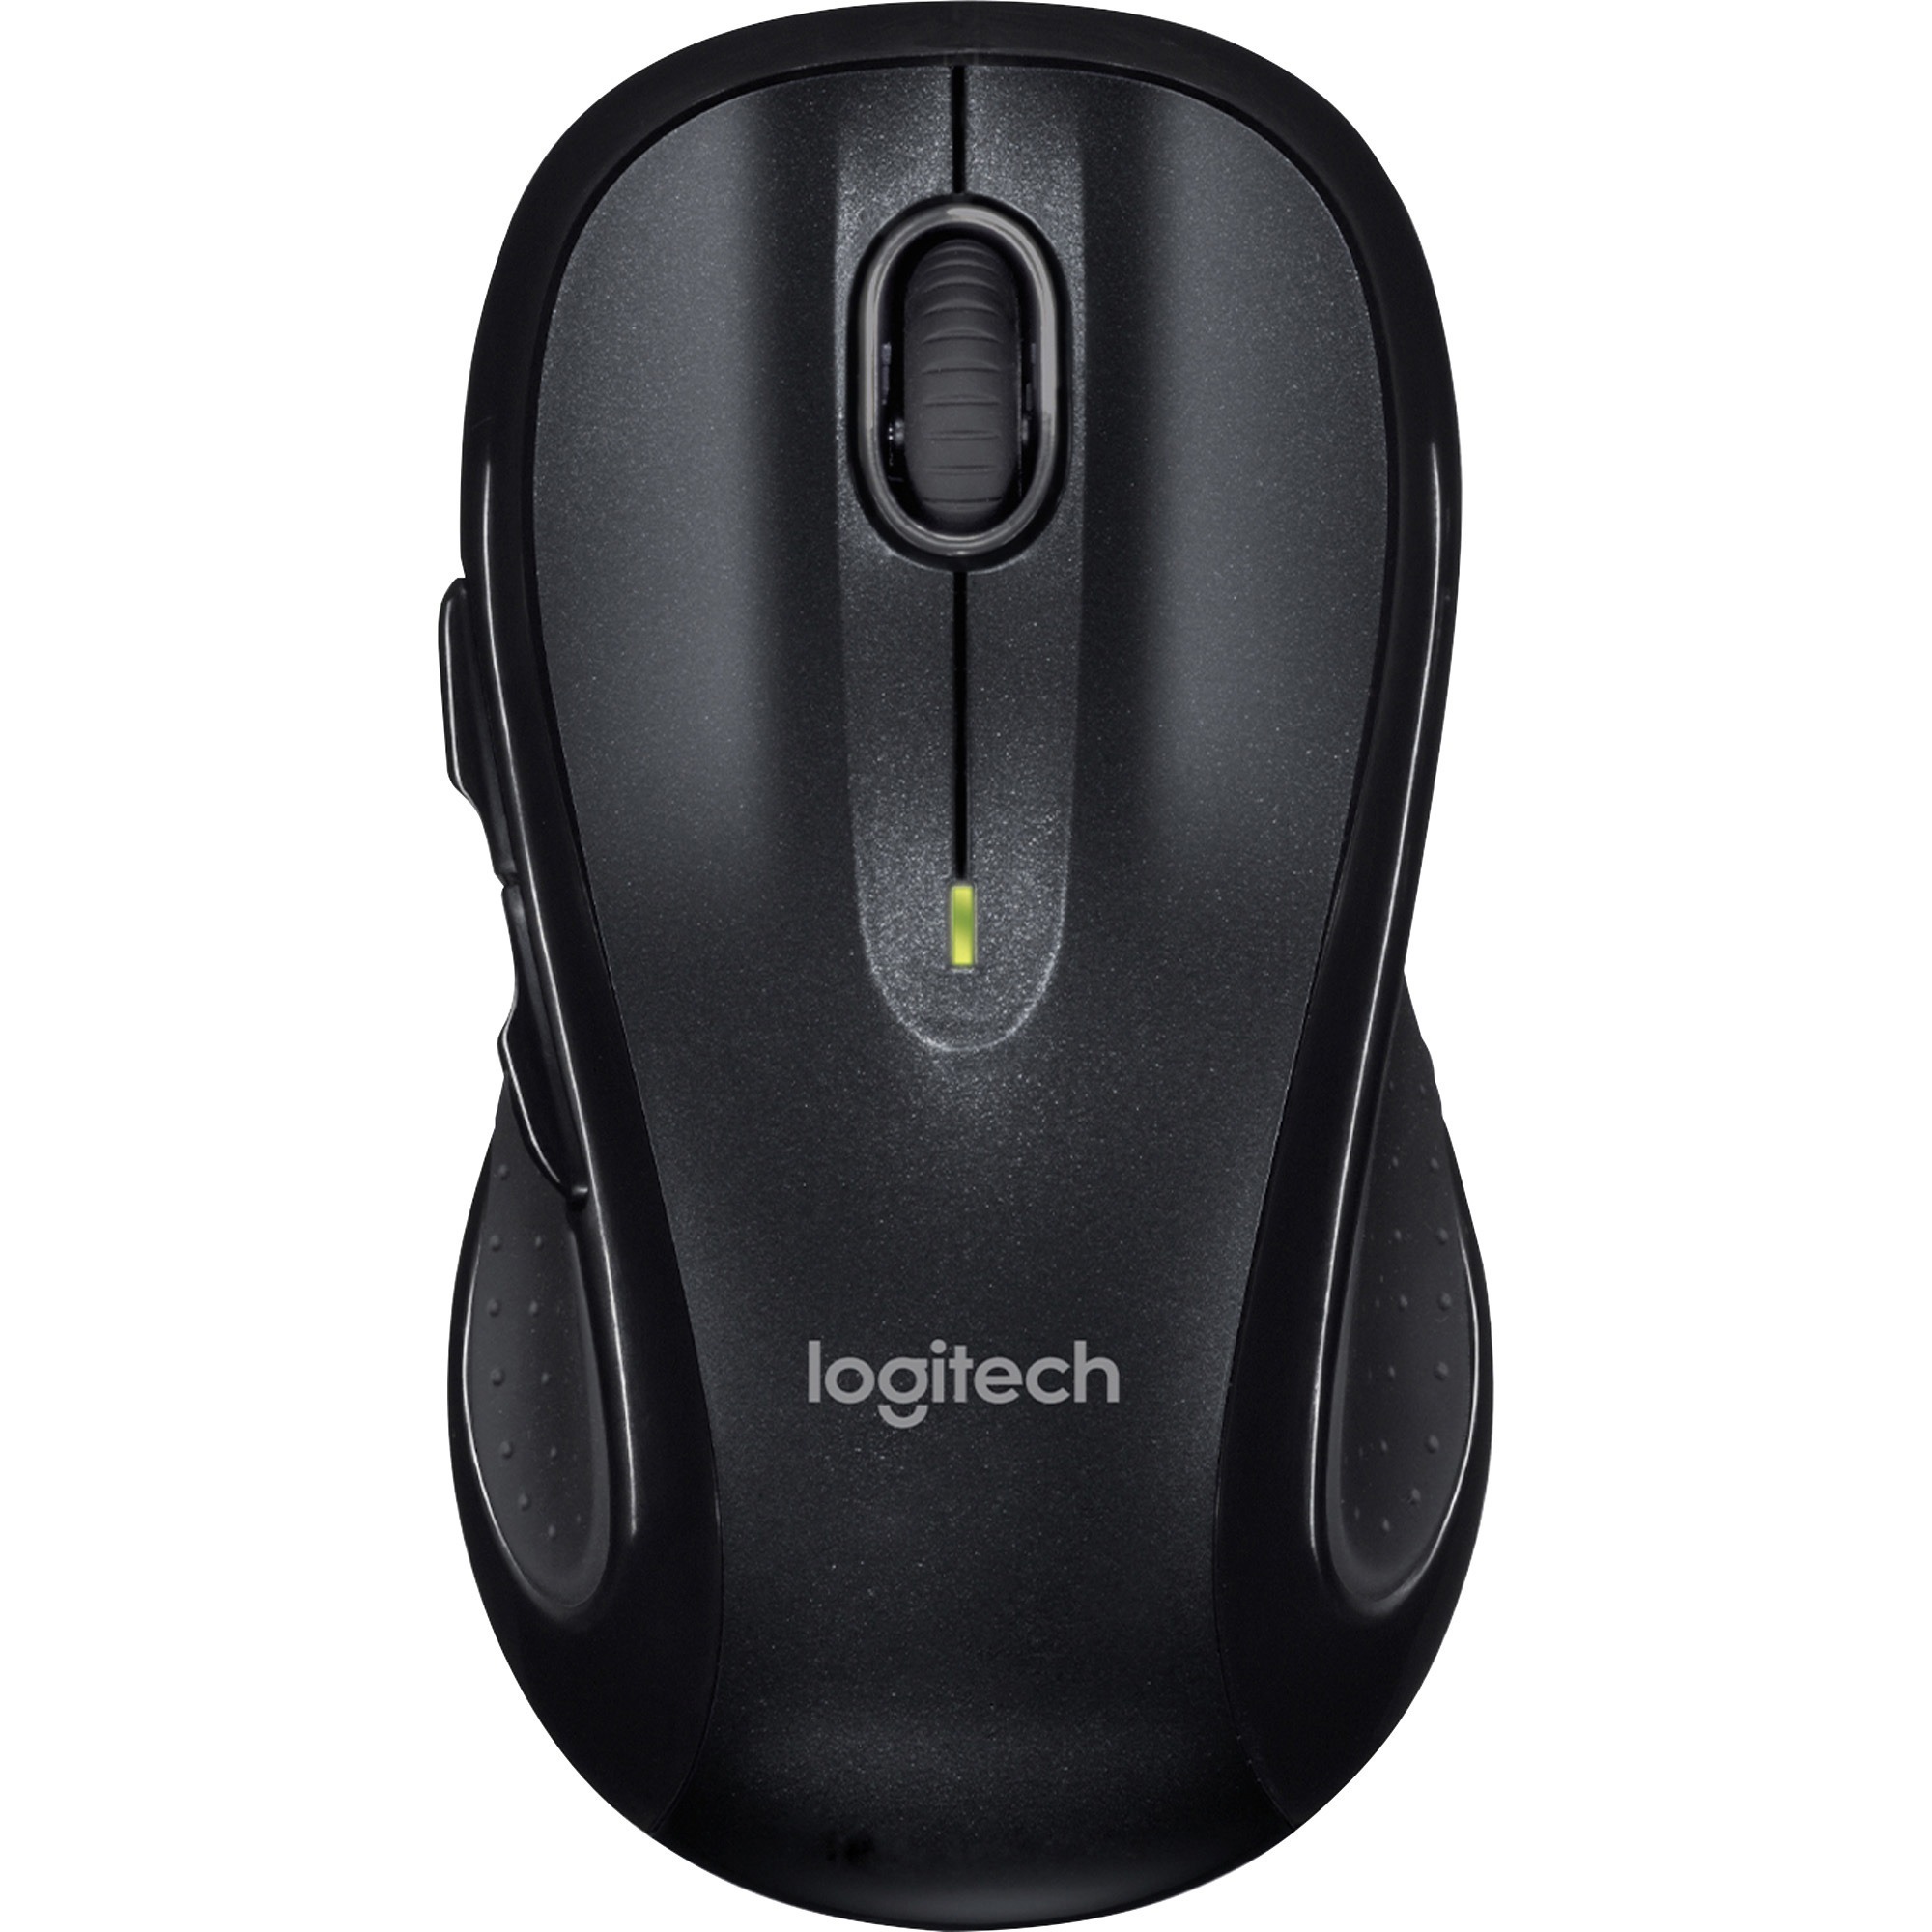 logitech mouse setpoint